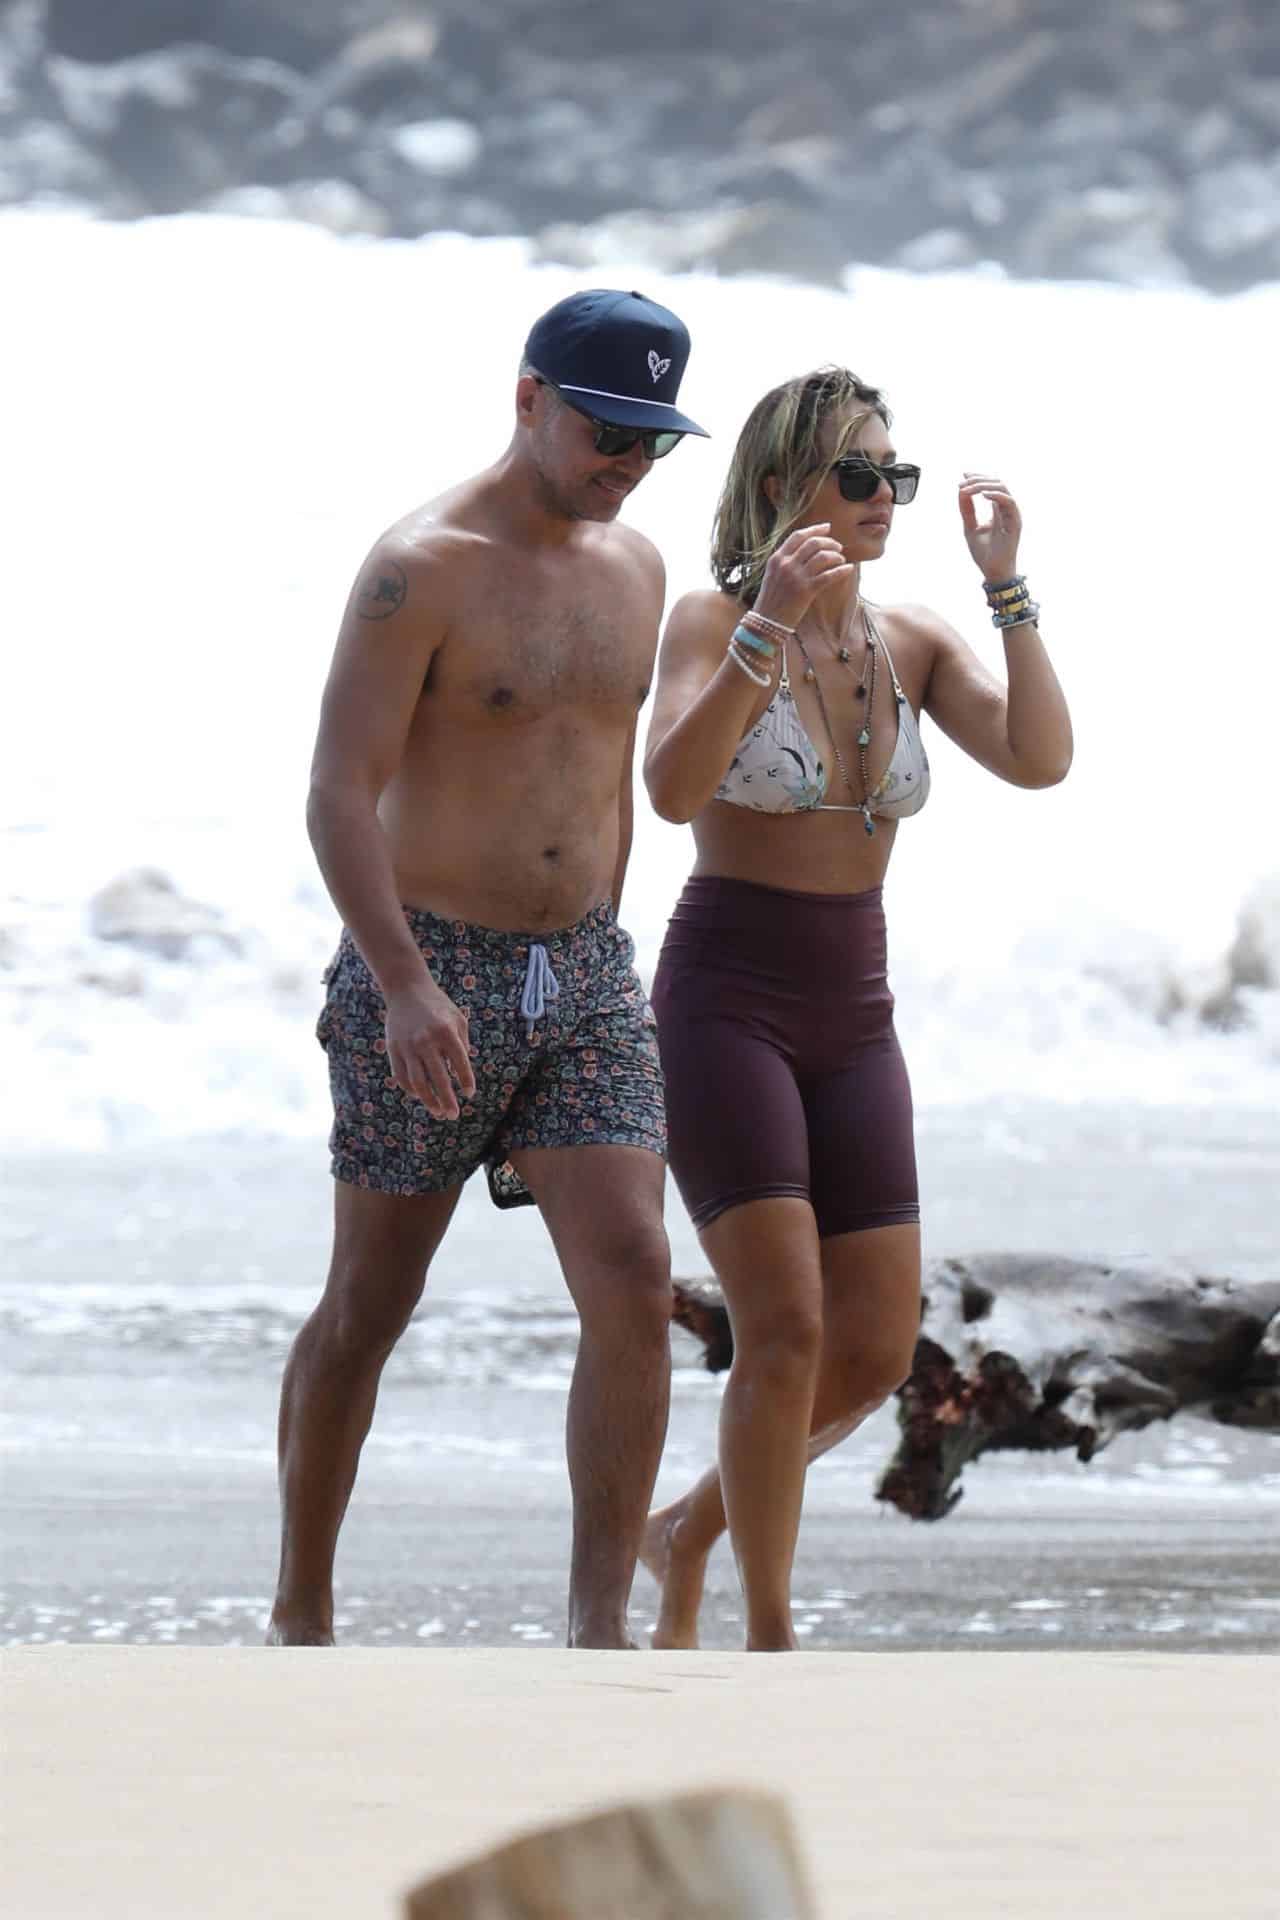 Jessica Alba Shows Off Her Figure in a Bikini Top at the Beach in Kauai